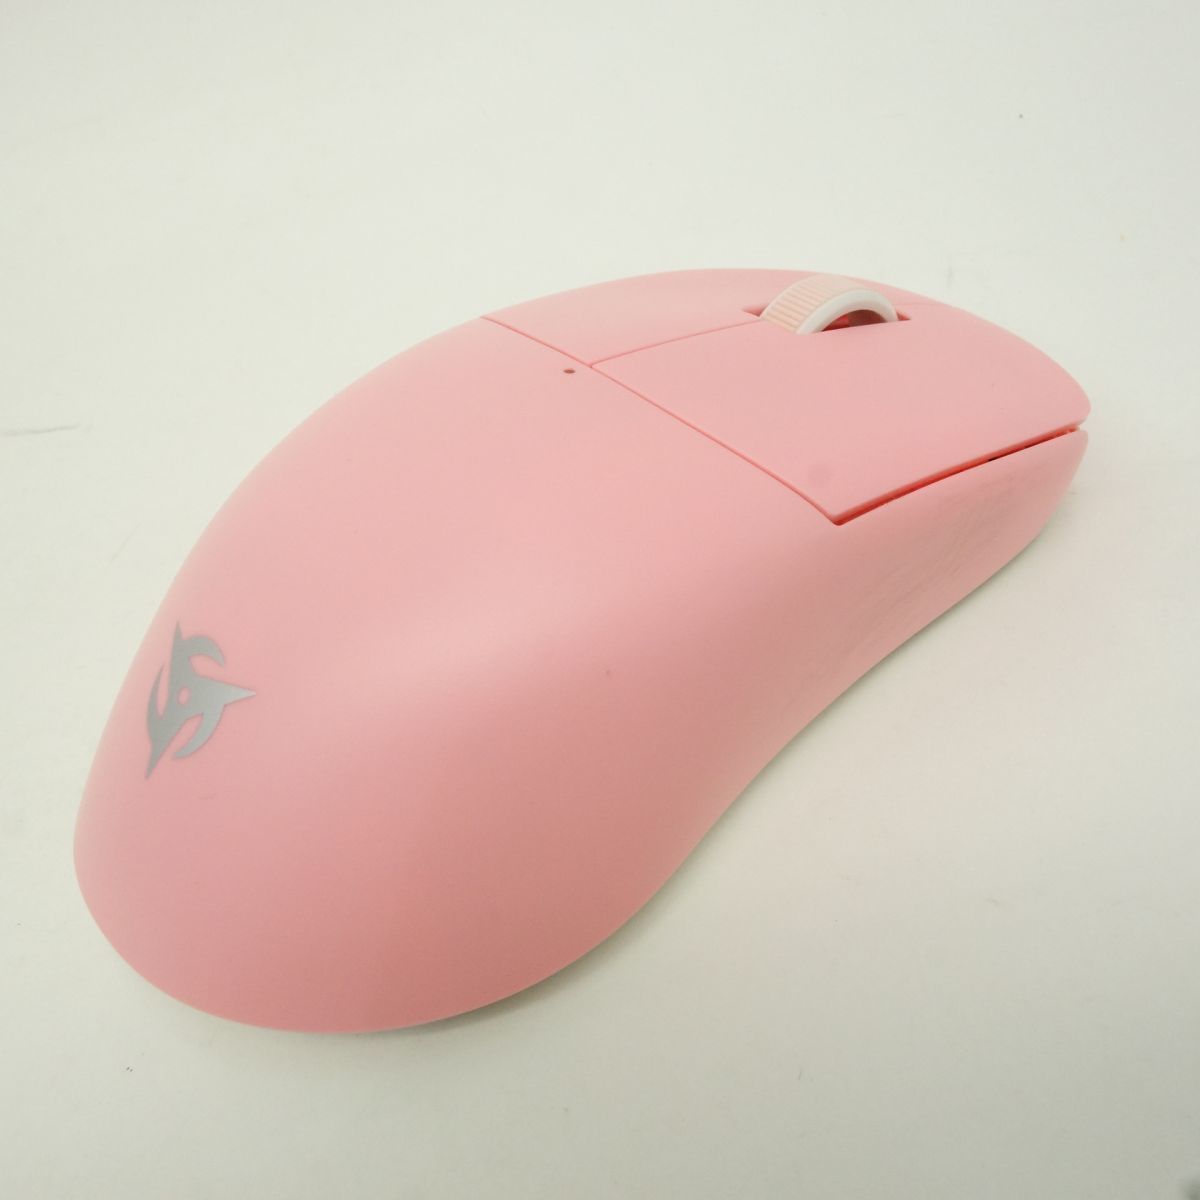 099 NINJUTSO Sorasola wireless ge-ming mouse pink * used 